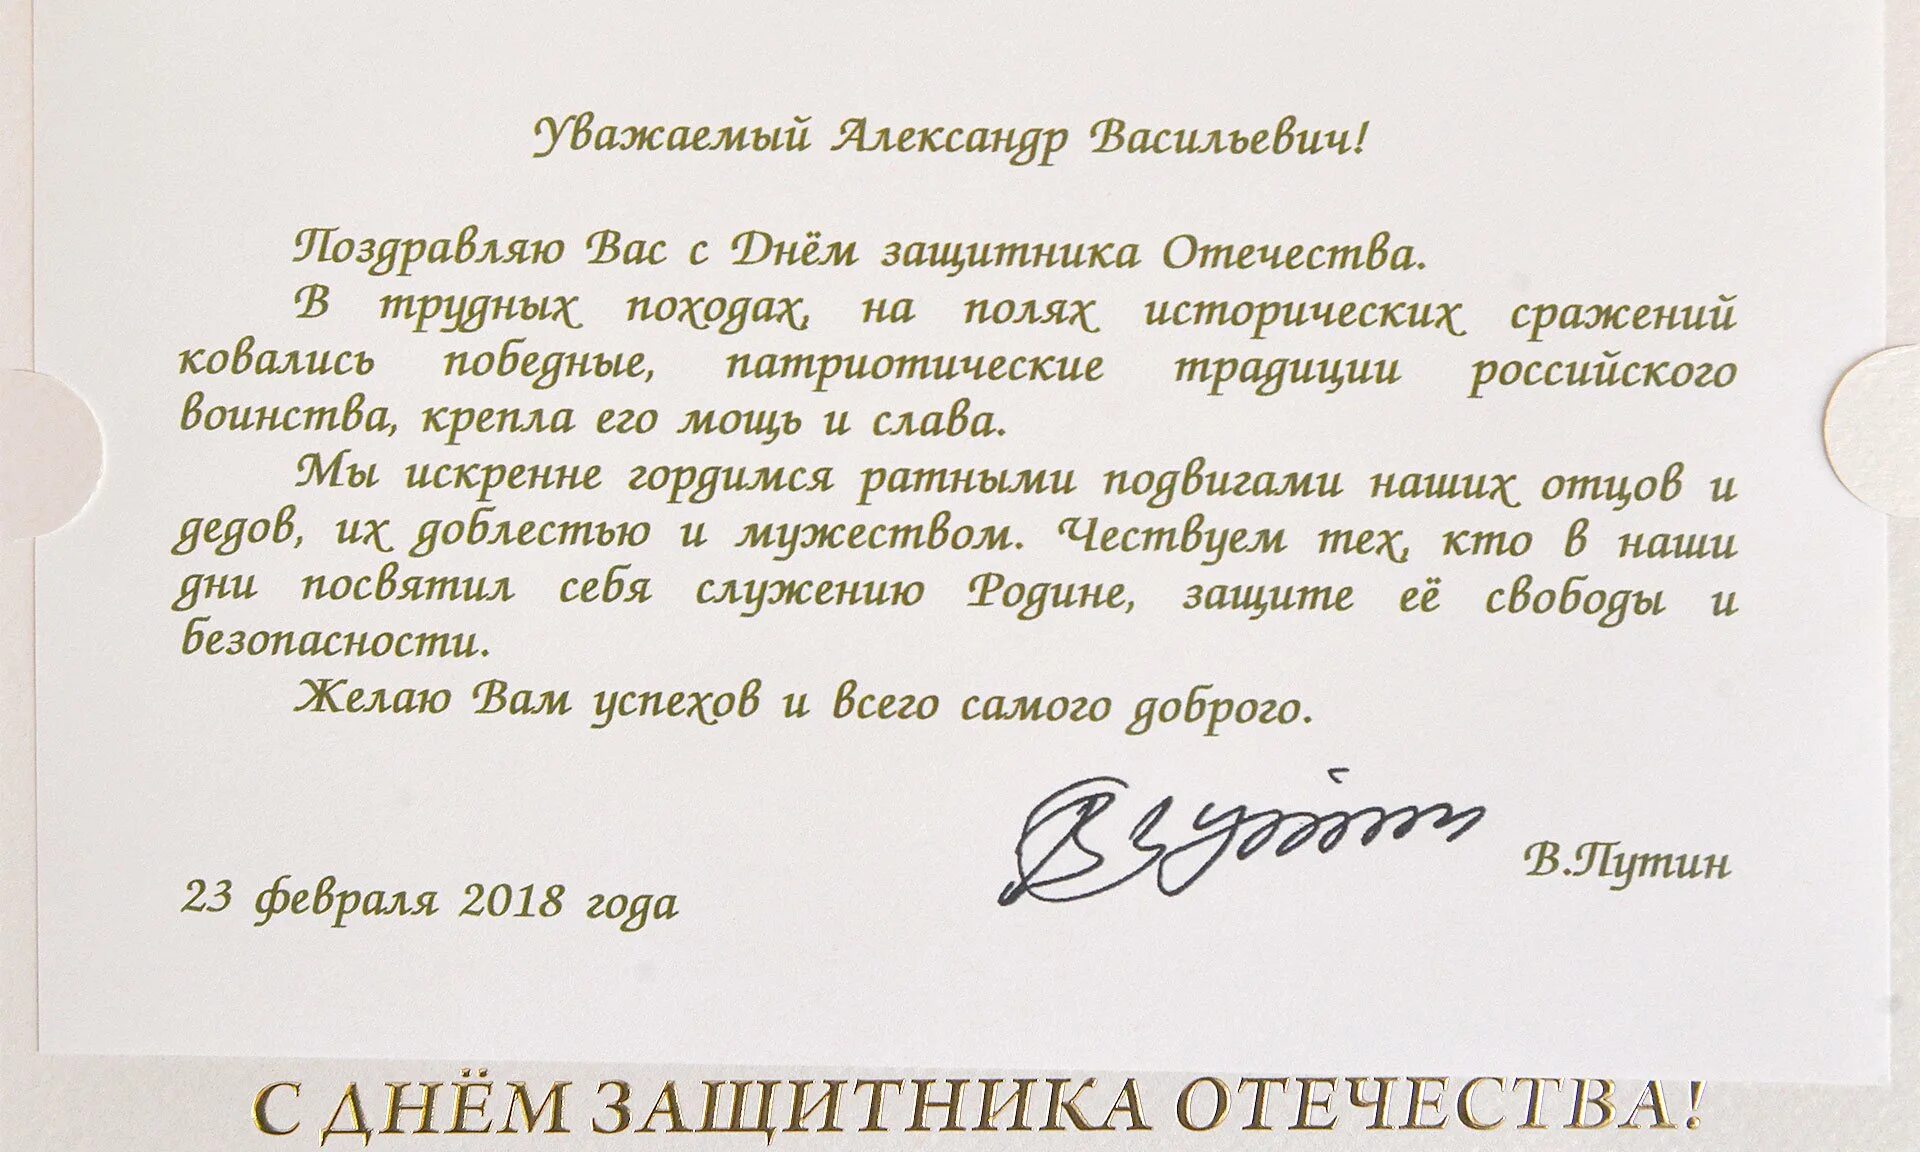 С днем защитника отечества губернатор. Поздравление Путина с днем защитника Отечества. Поздравление губернатора с днем рождения. Поздравление губернатора с 23 февраля. Губернатор поздравил с 23 февраля.